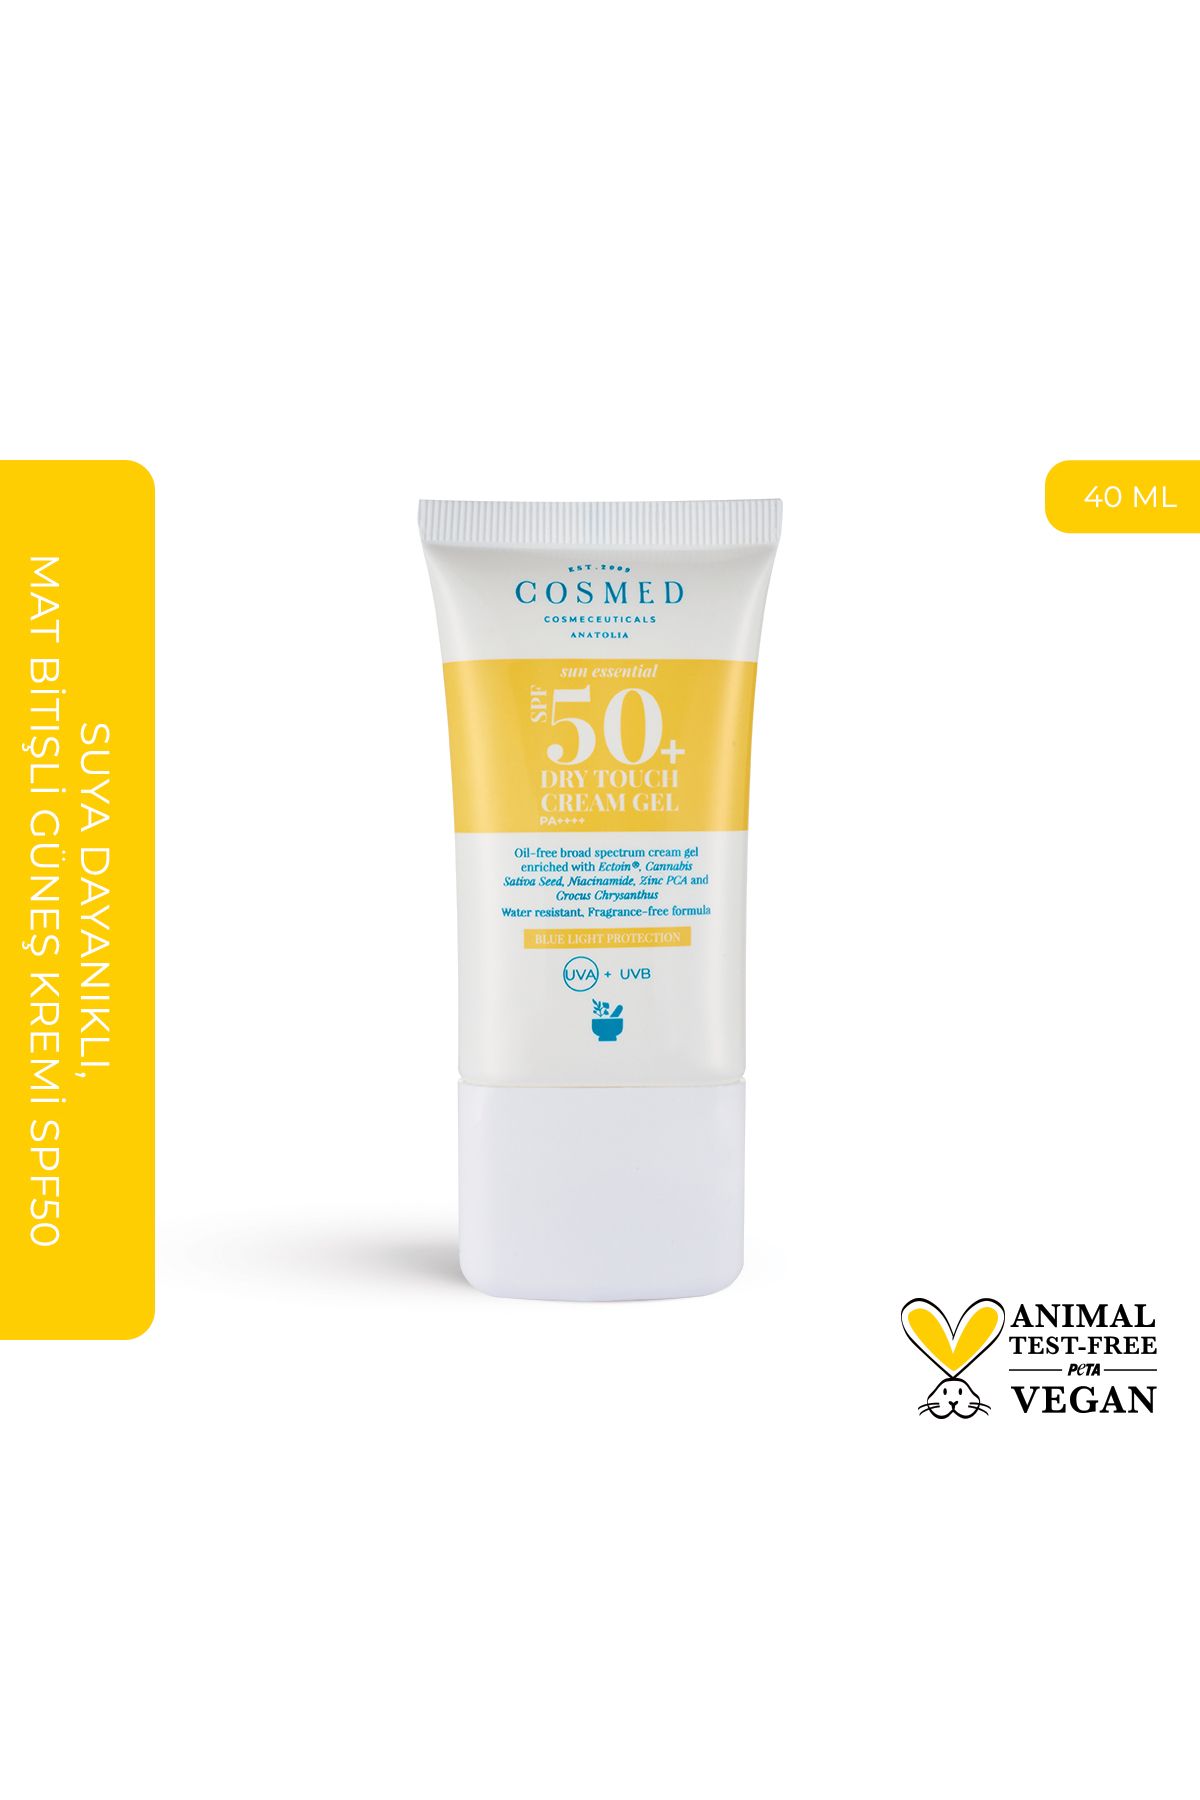 COSMED Sun Essential Dry Touch Cream Gel Spf 50+ 40 ml